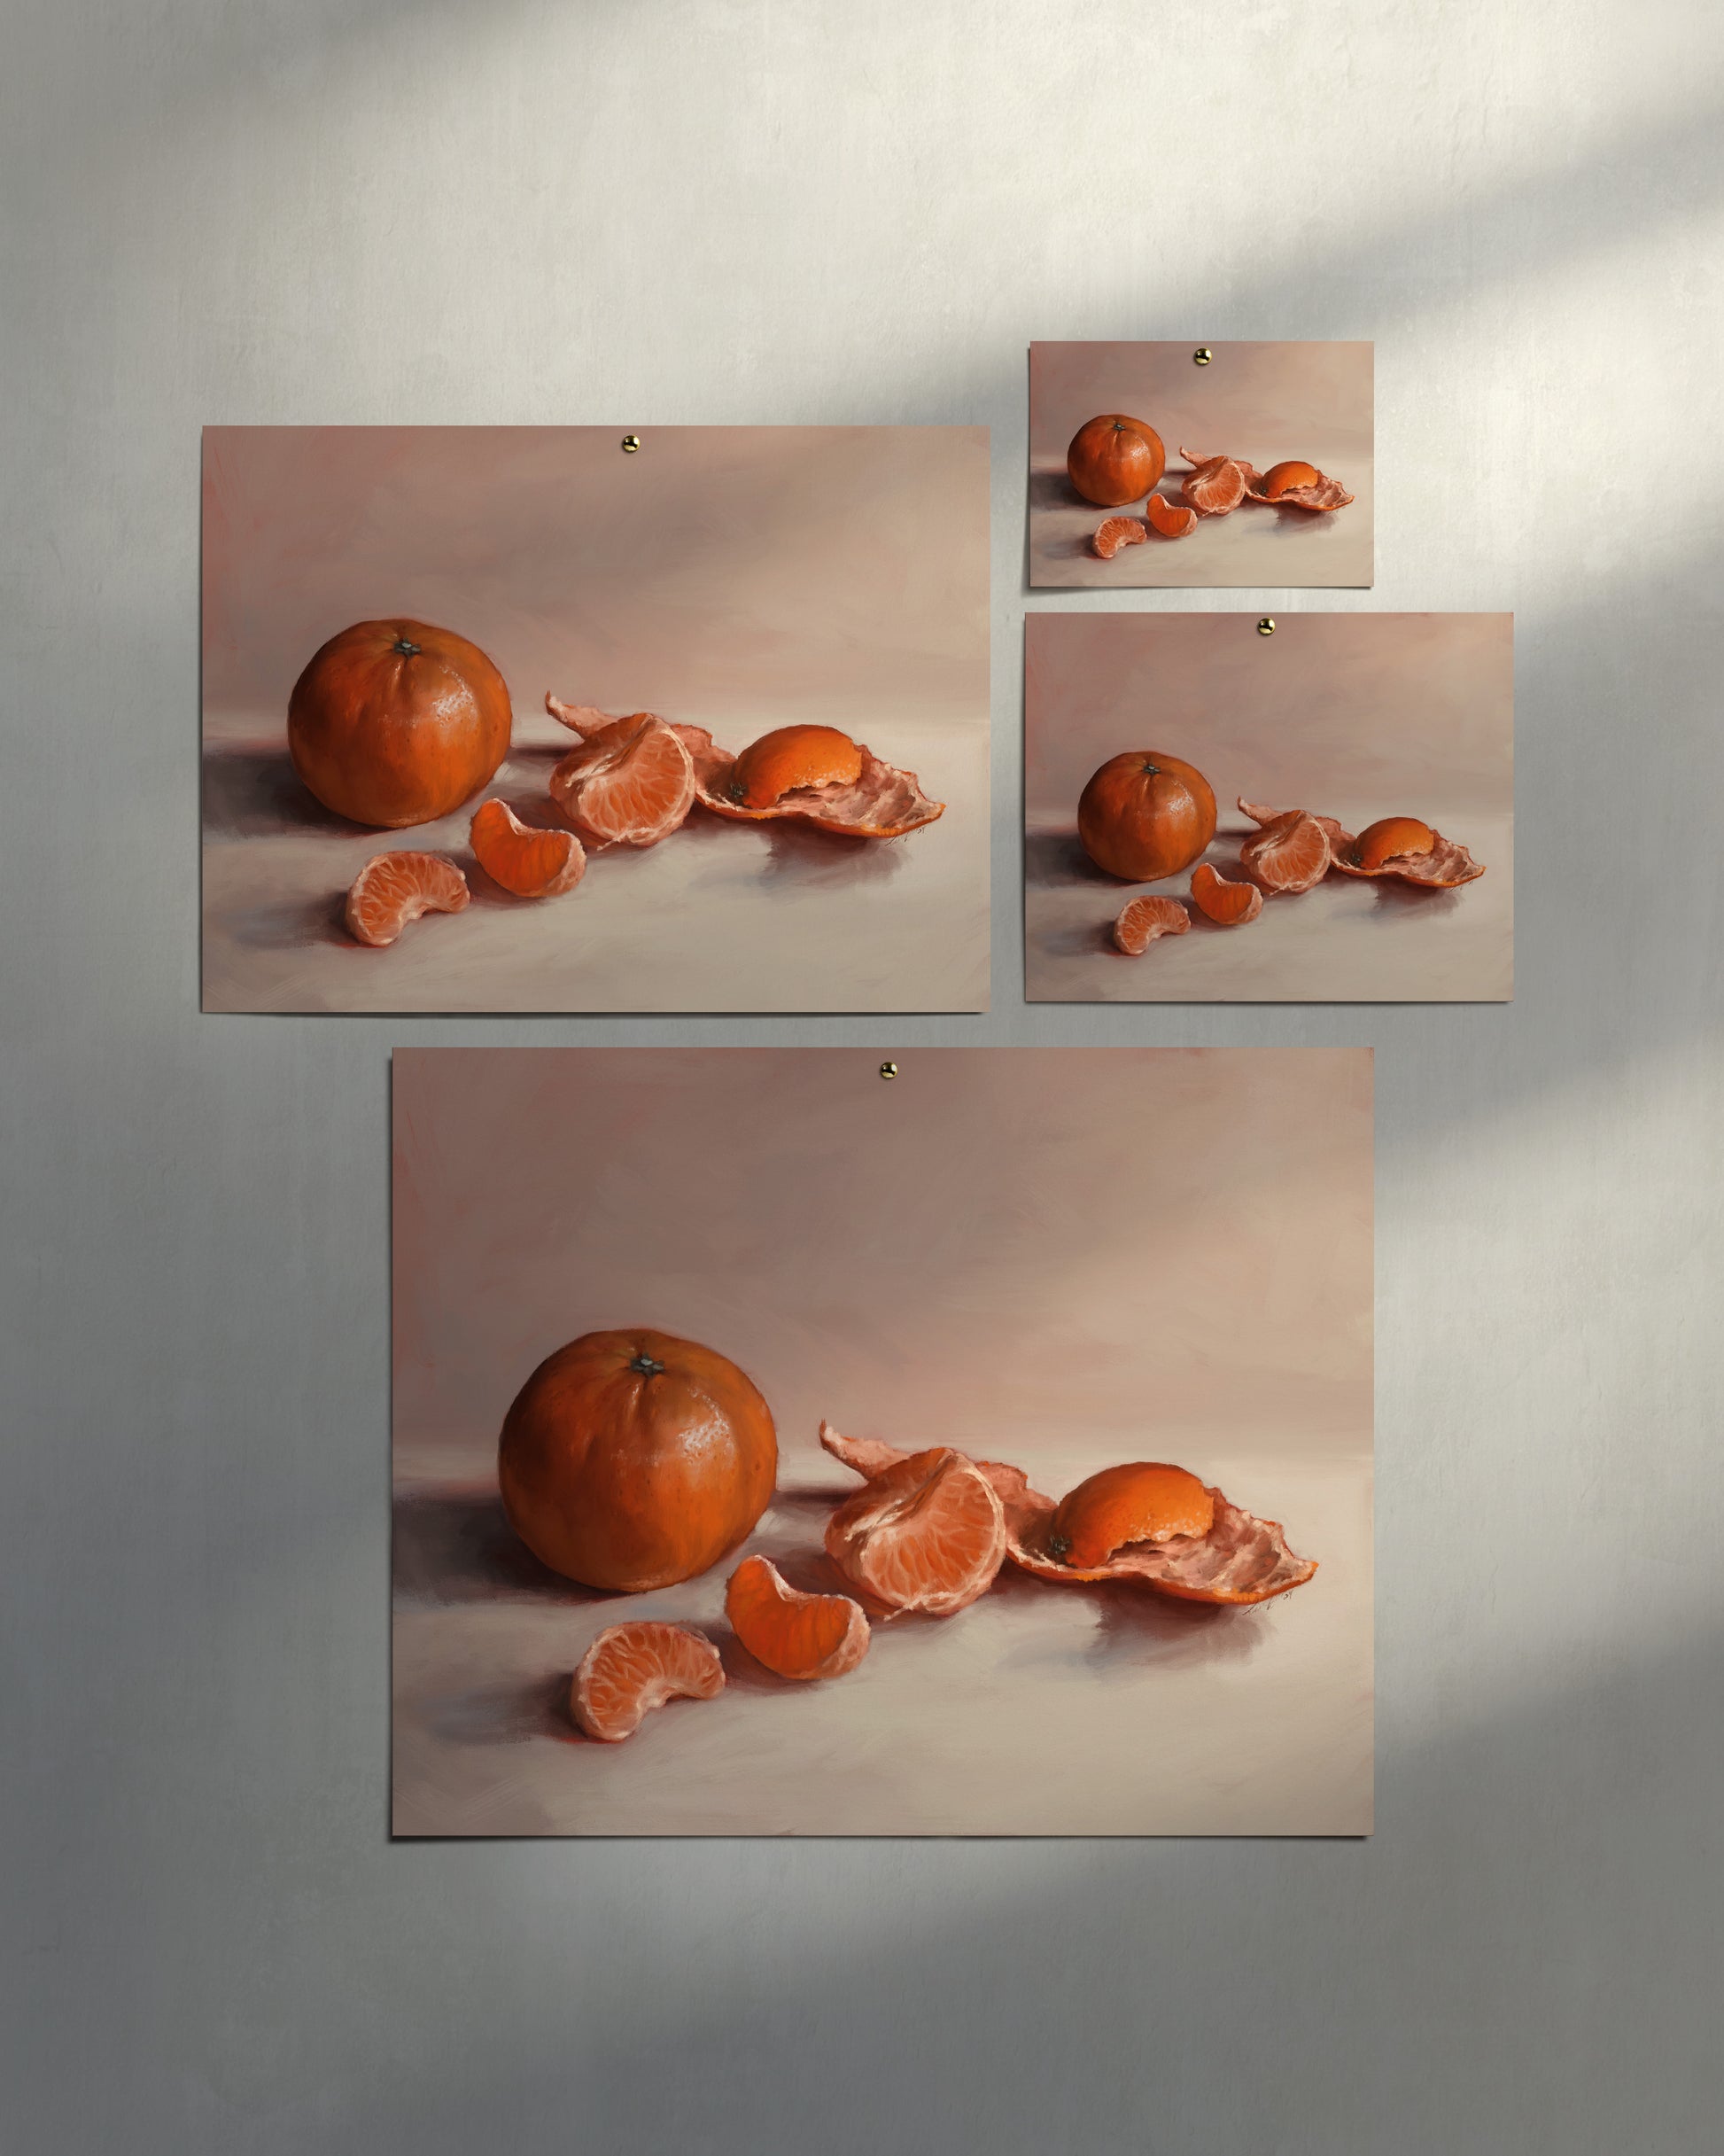 "Clementines" by Catherine Hébert - Clementine Orange Still Life Art Print